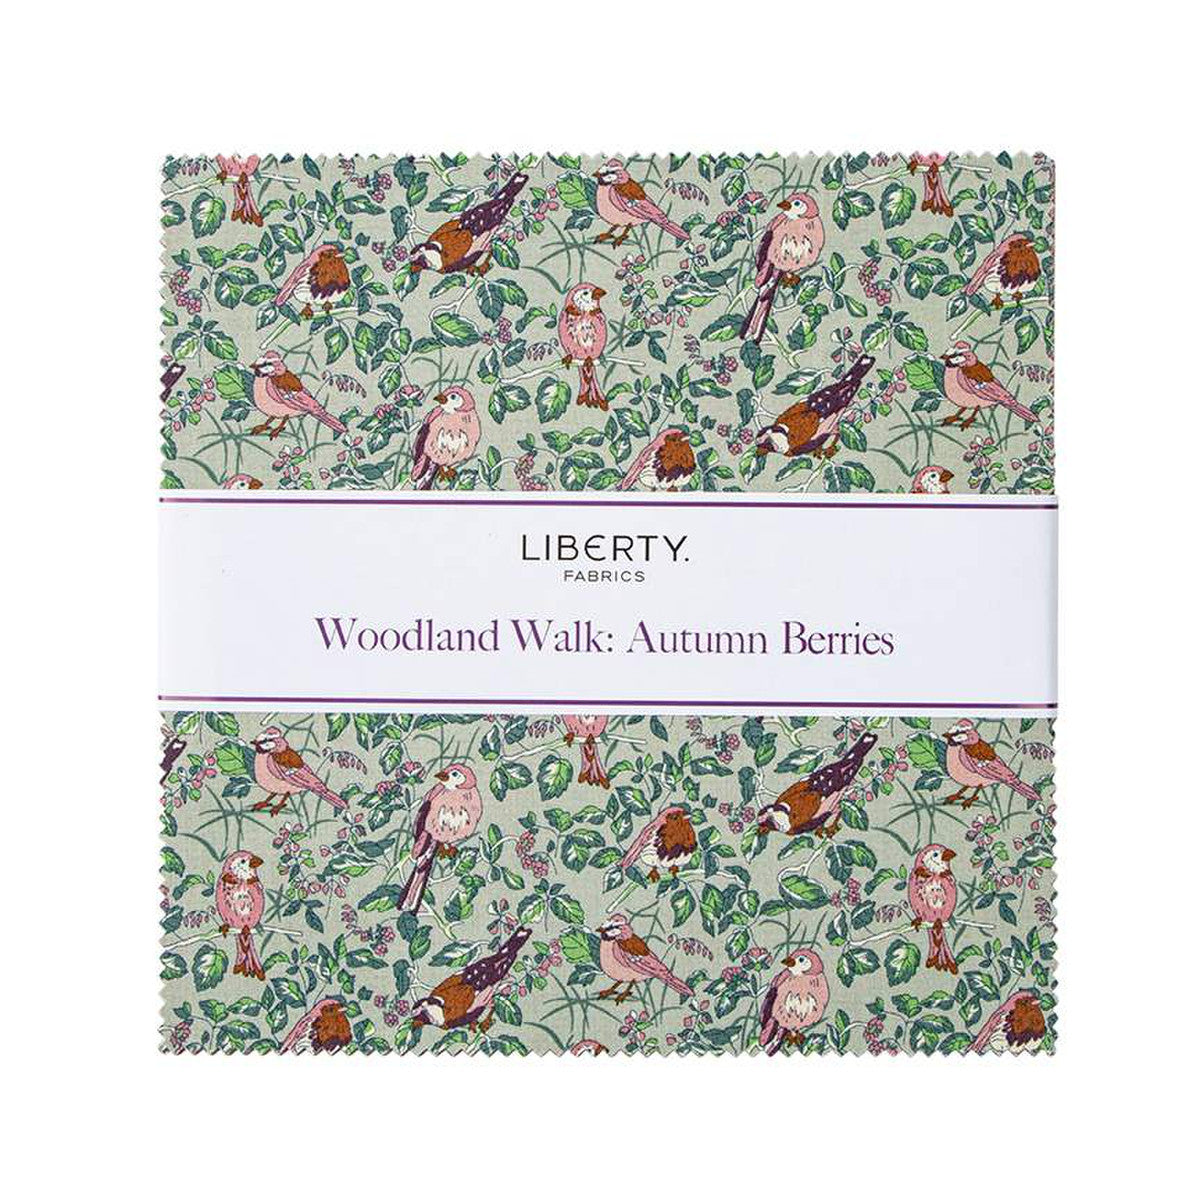 Woodland Walk / Autumn Berries by Liberty Fabrics